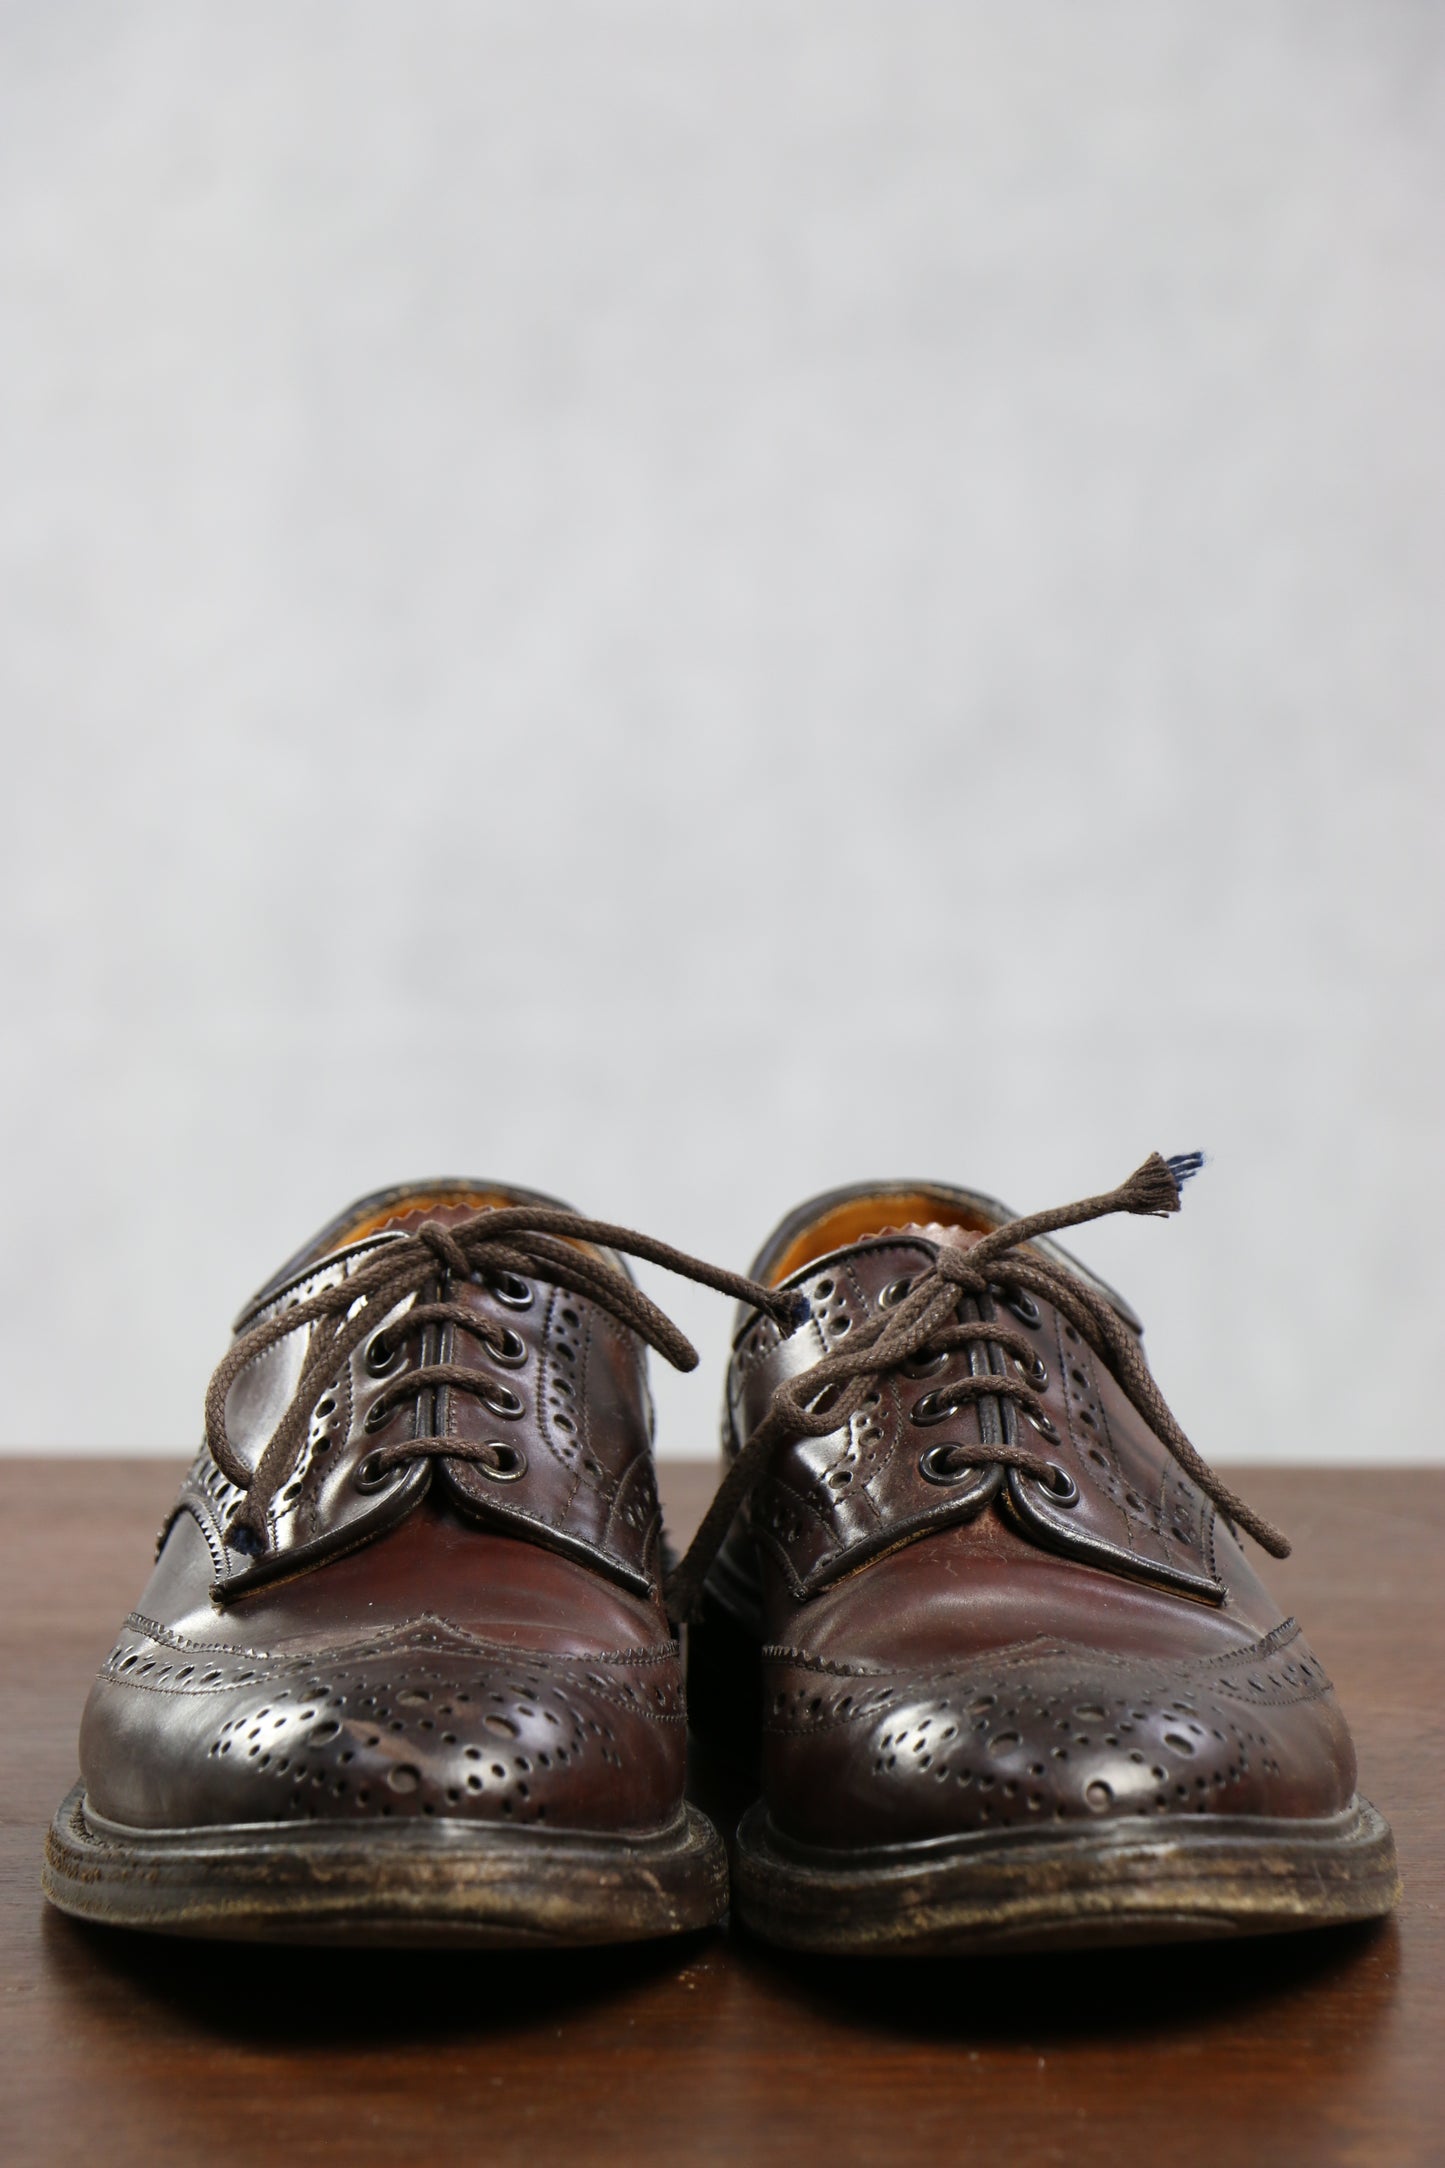 Tricker's Country Brogue Brown Shoes, clochard92.com